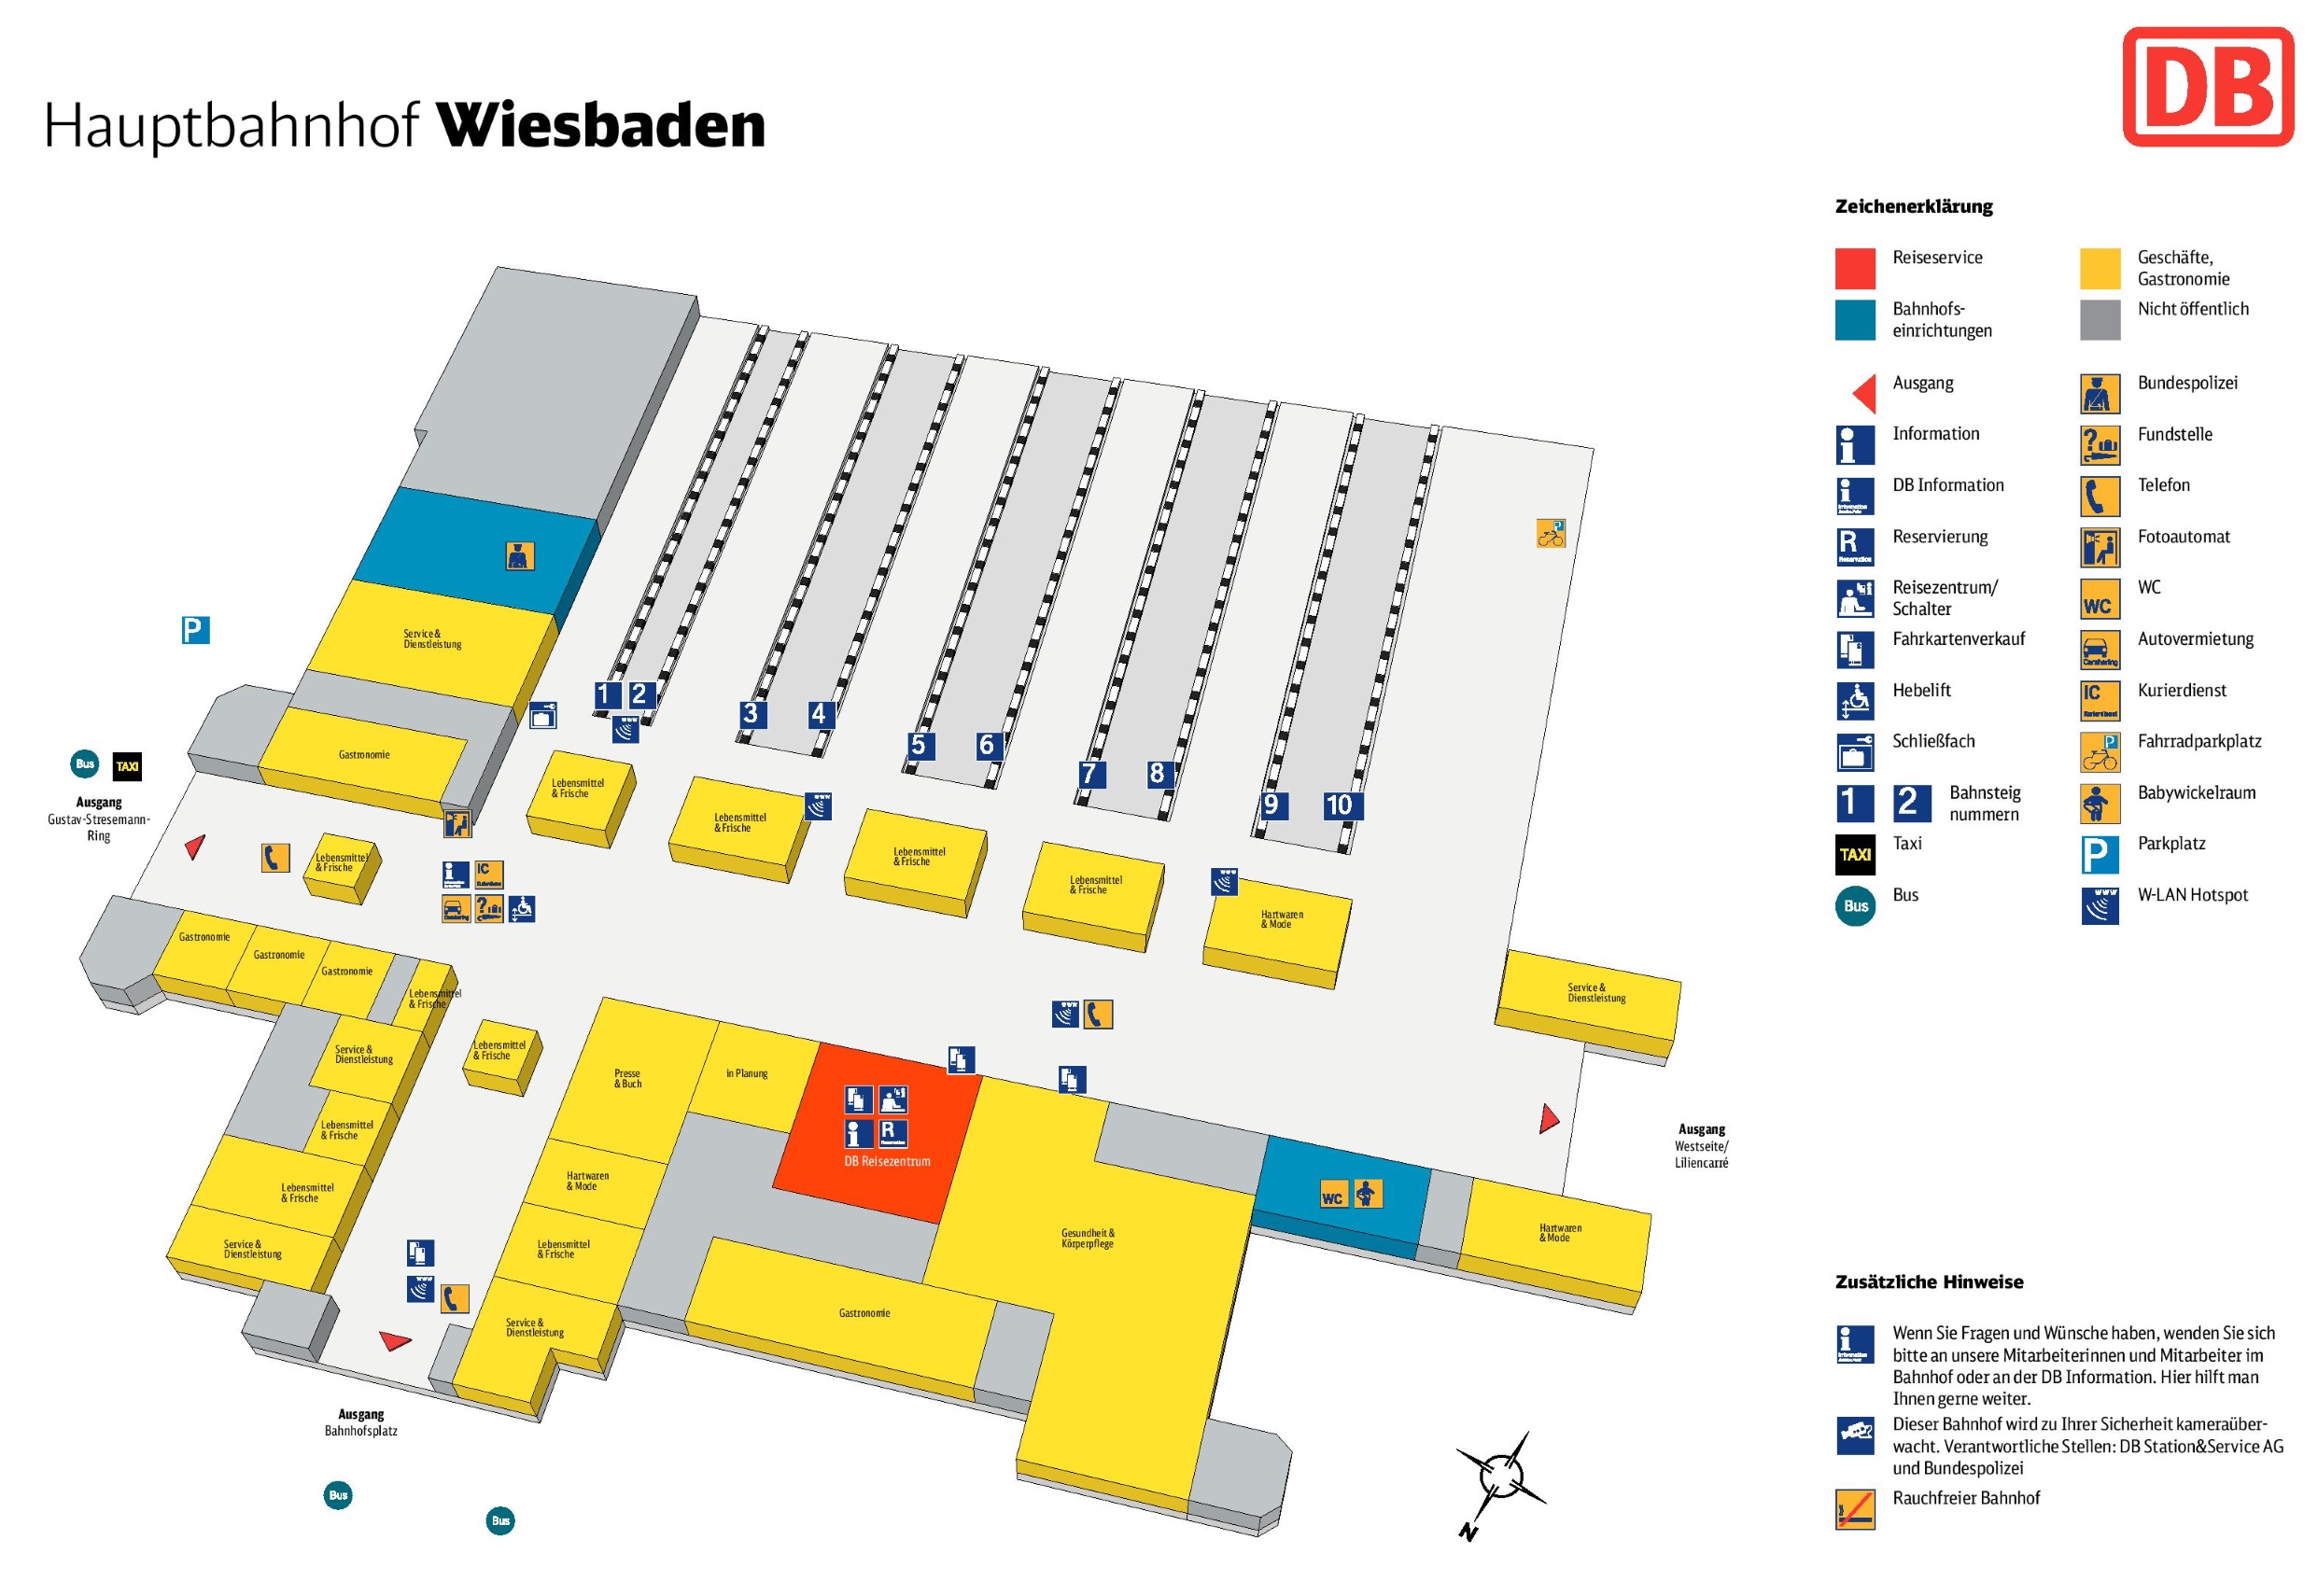 Wiesbaden hauptbahnhof map - Ontheworldmap.com